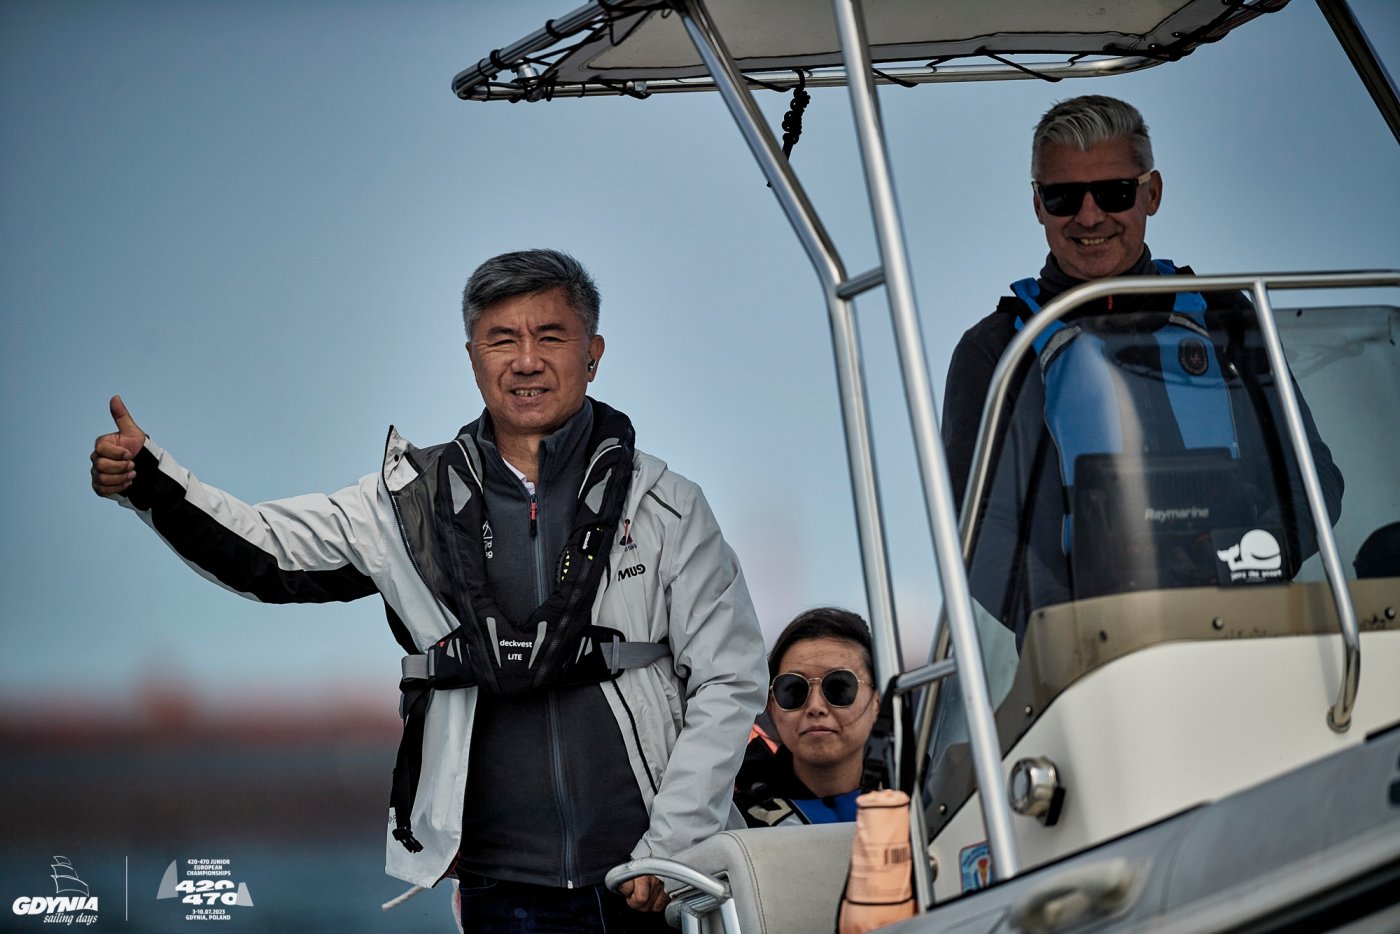 Prezydent World Sailing Quanhai Li i Tomasz Chamera na motorówce podczas Gdynia Sailing Days